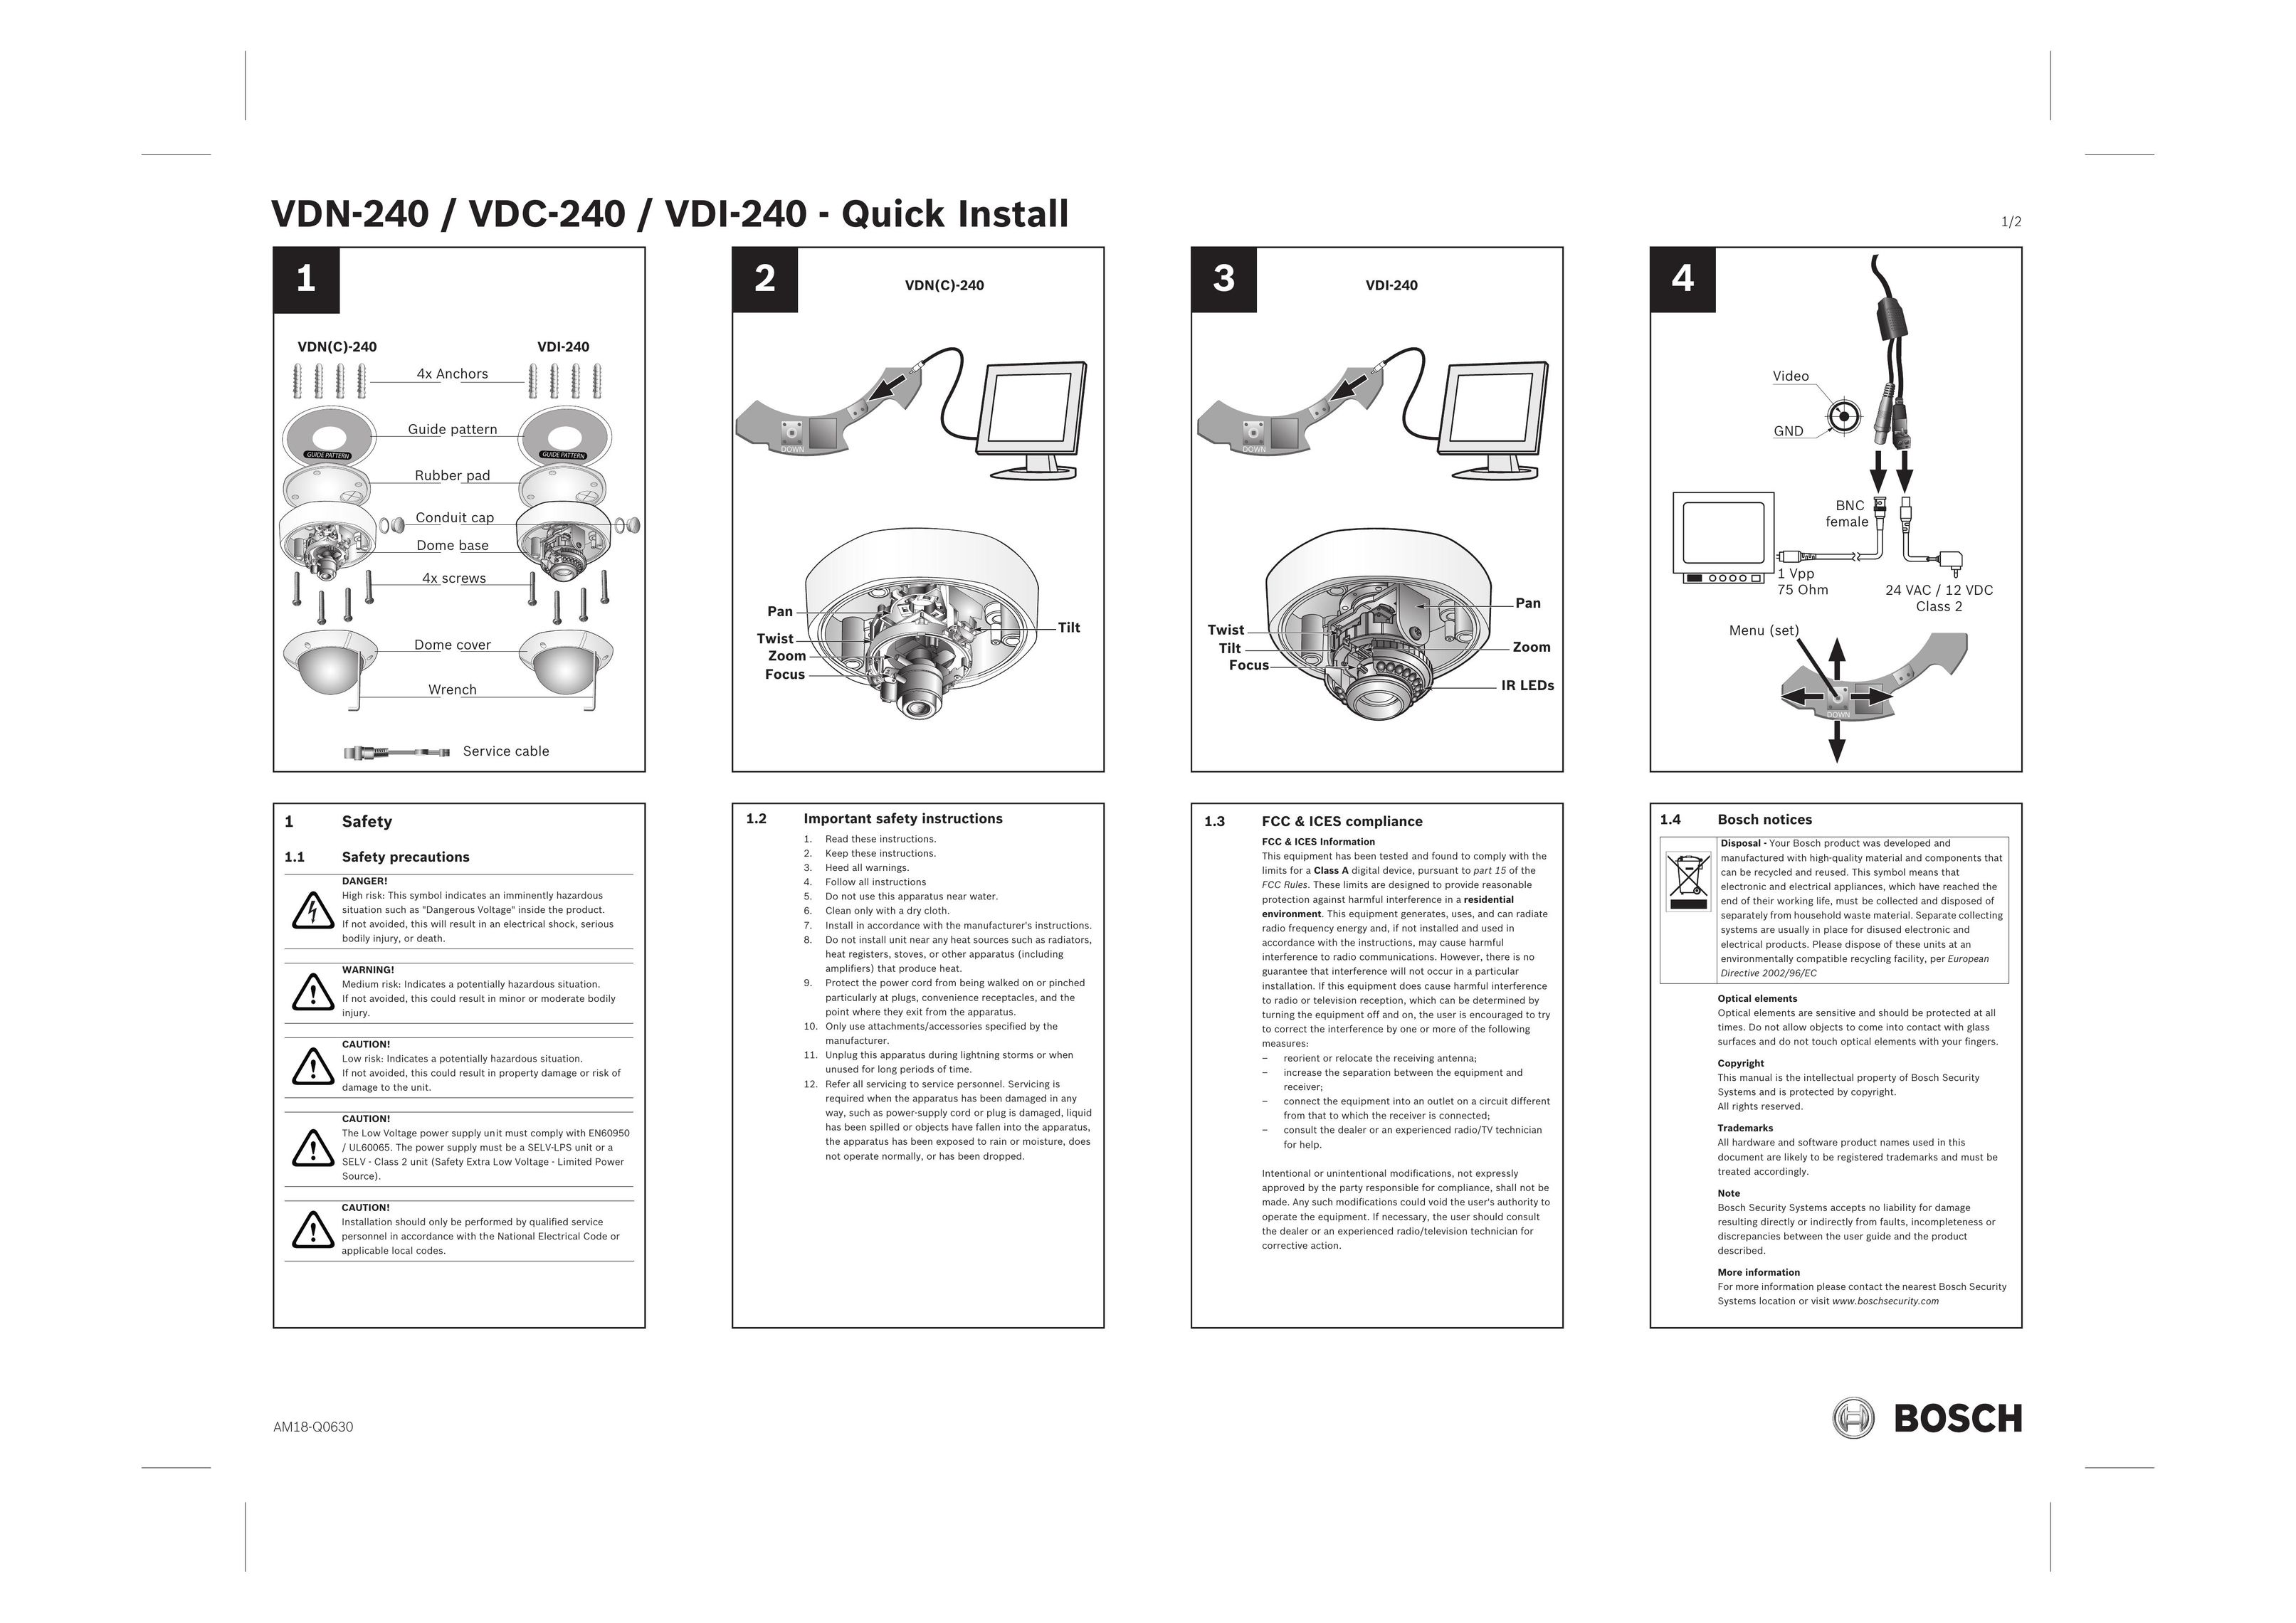 Bosch Power Tools VDN-240 Welding Consumables User Manual